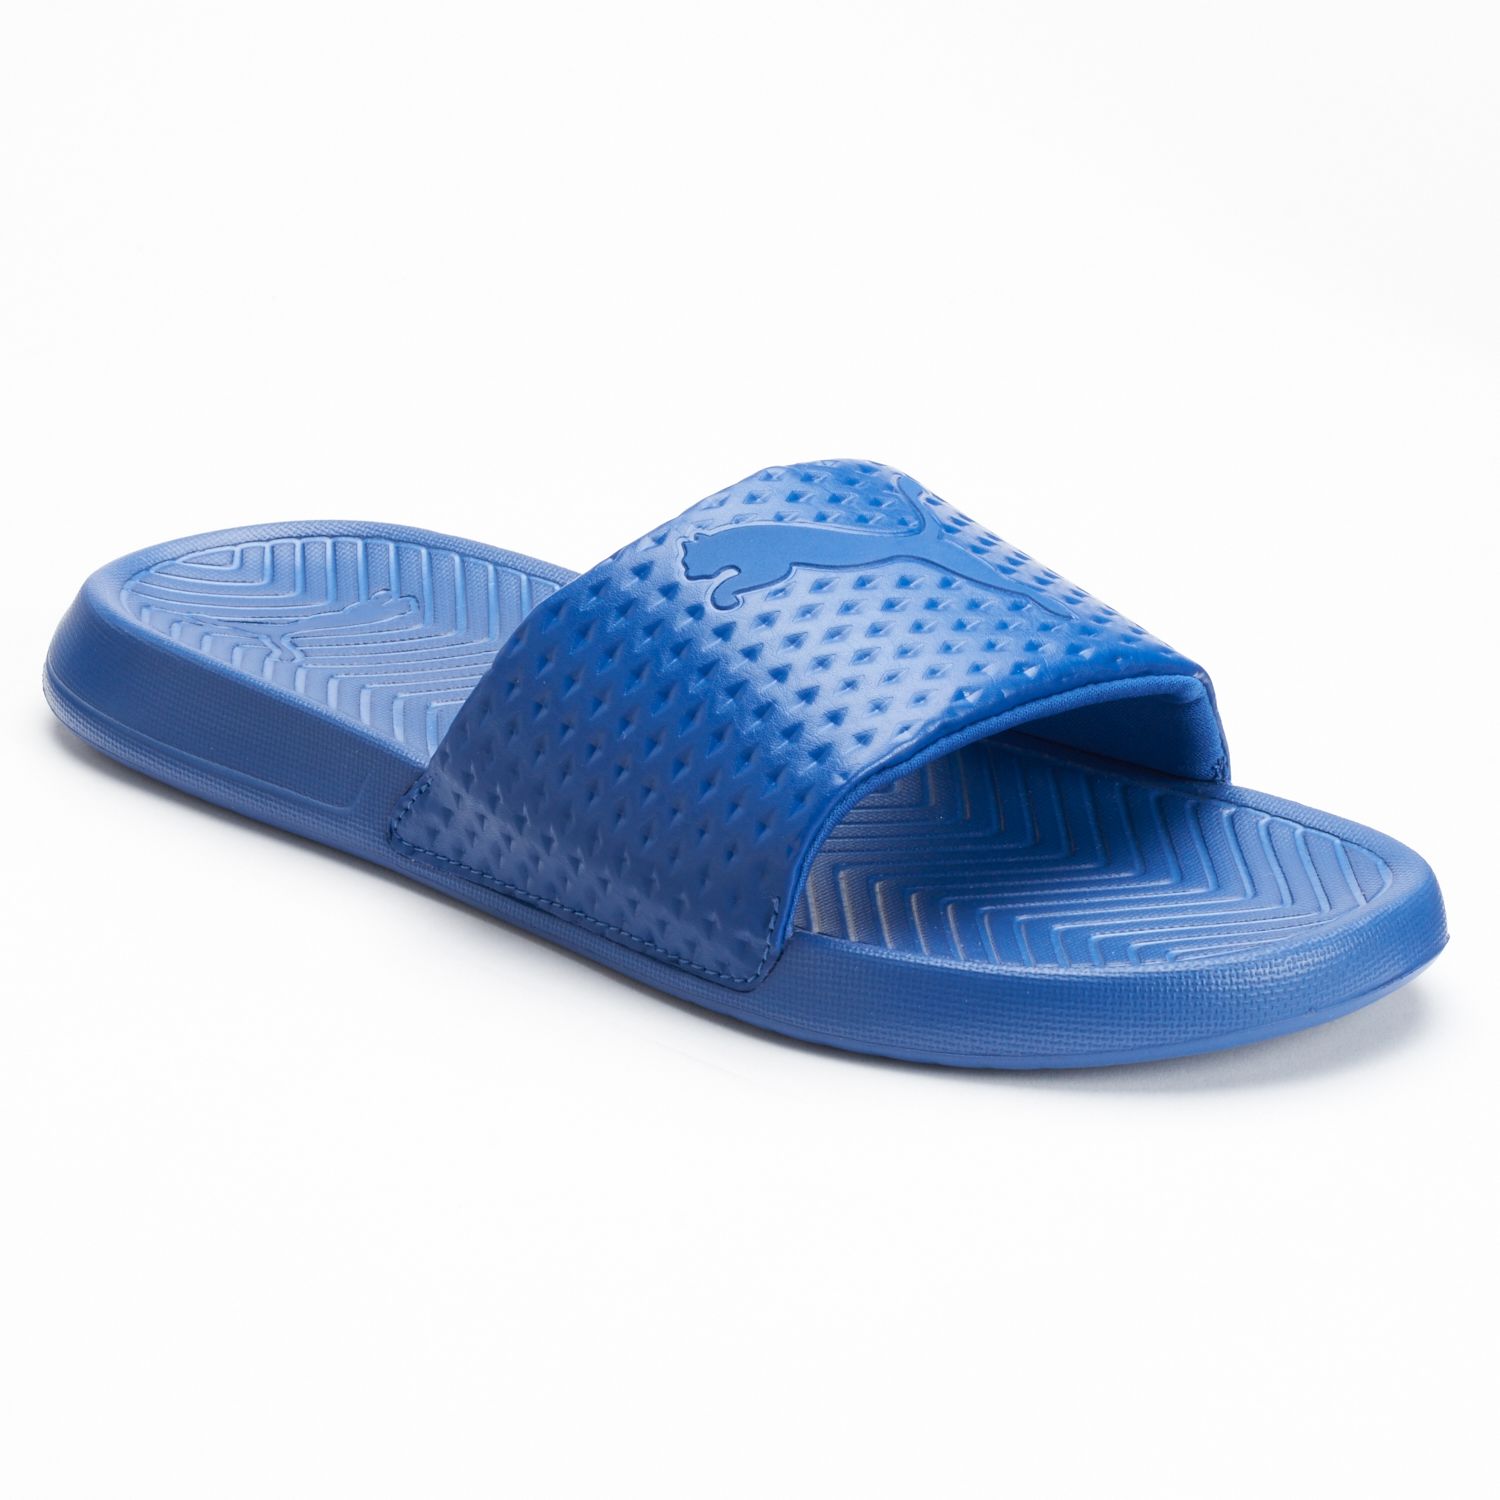 puma men's slide sandals